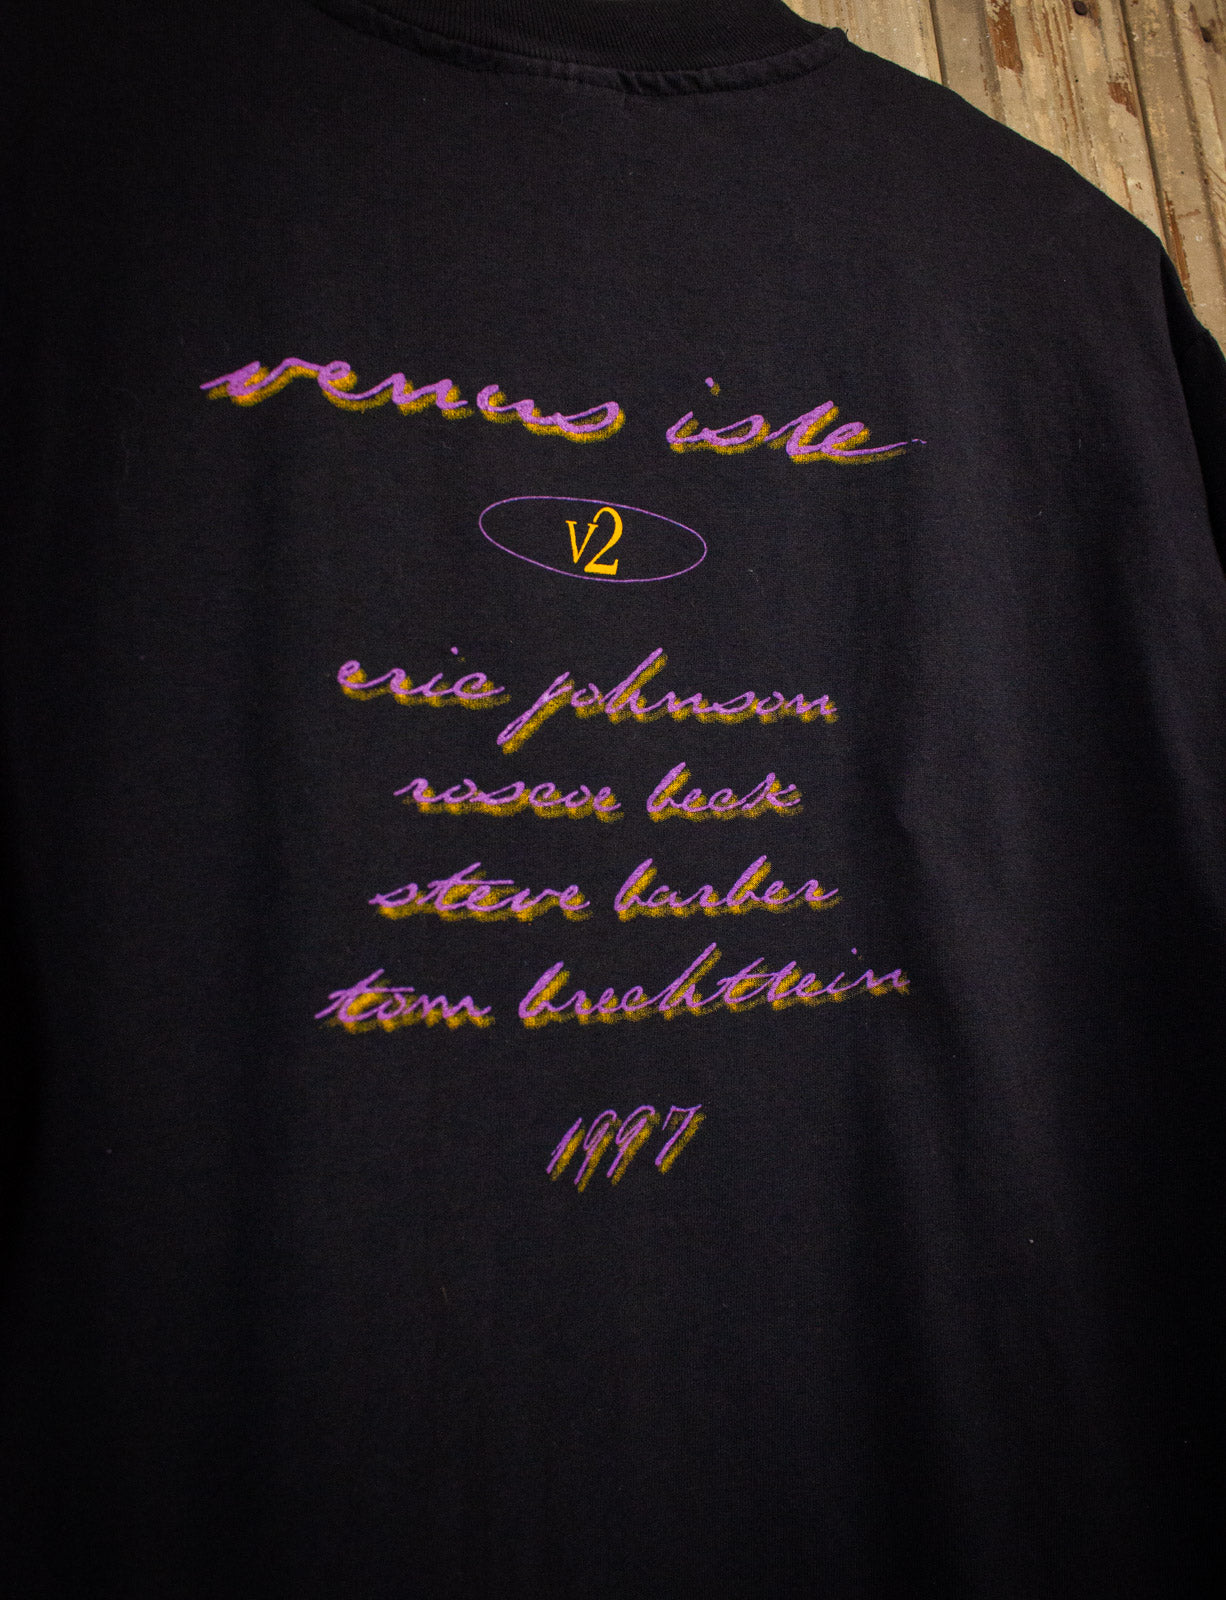 Vintage Eric Johnson Venus Isle Concert T Shirt 1997 Black Large